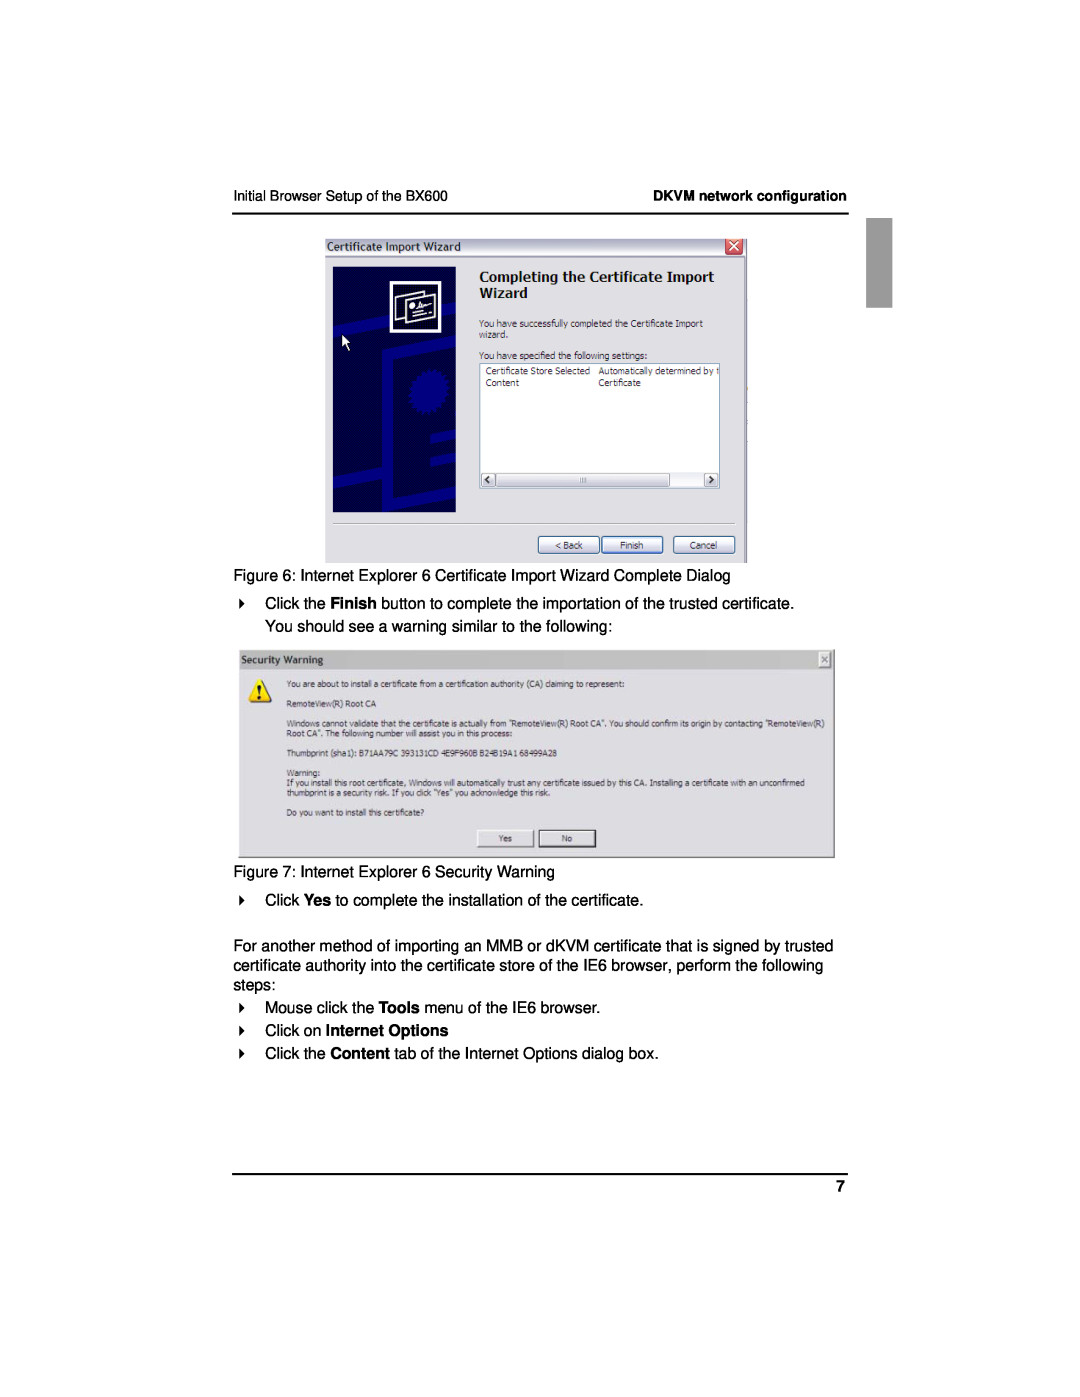 Fujitsu BX600 manual Click on Internet Options 